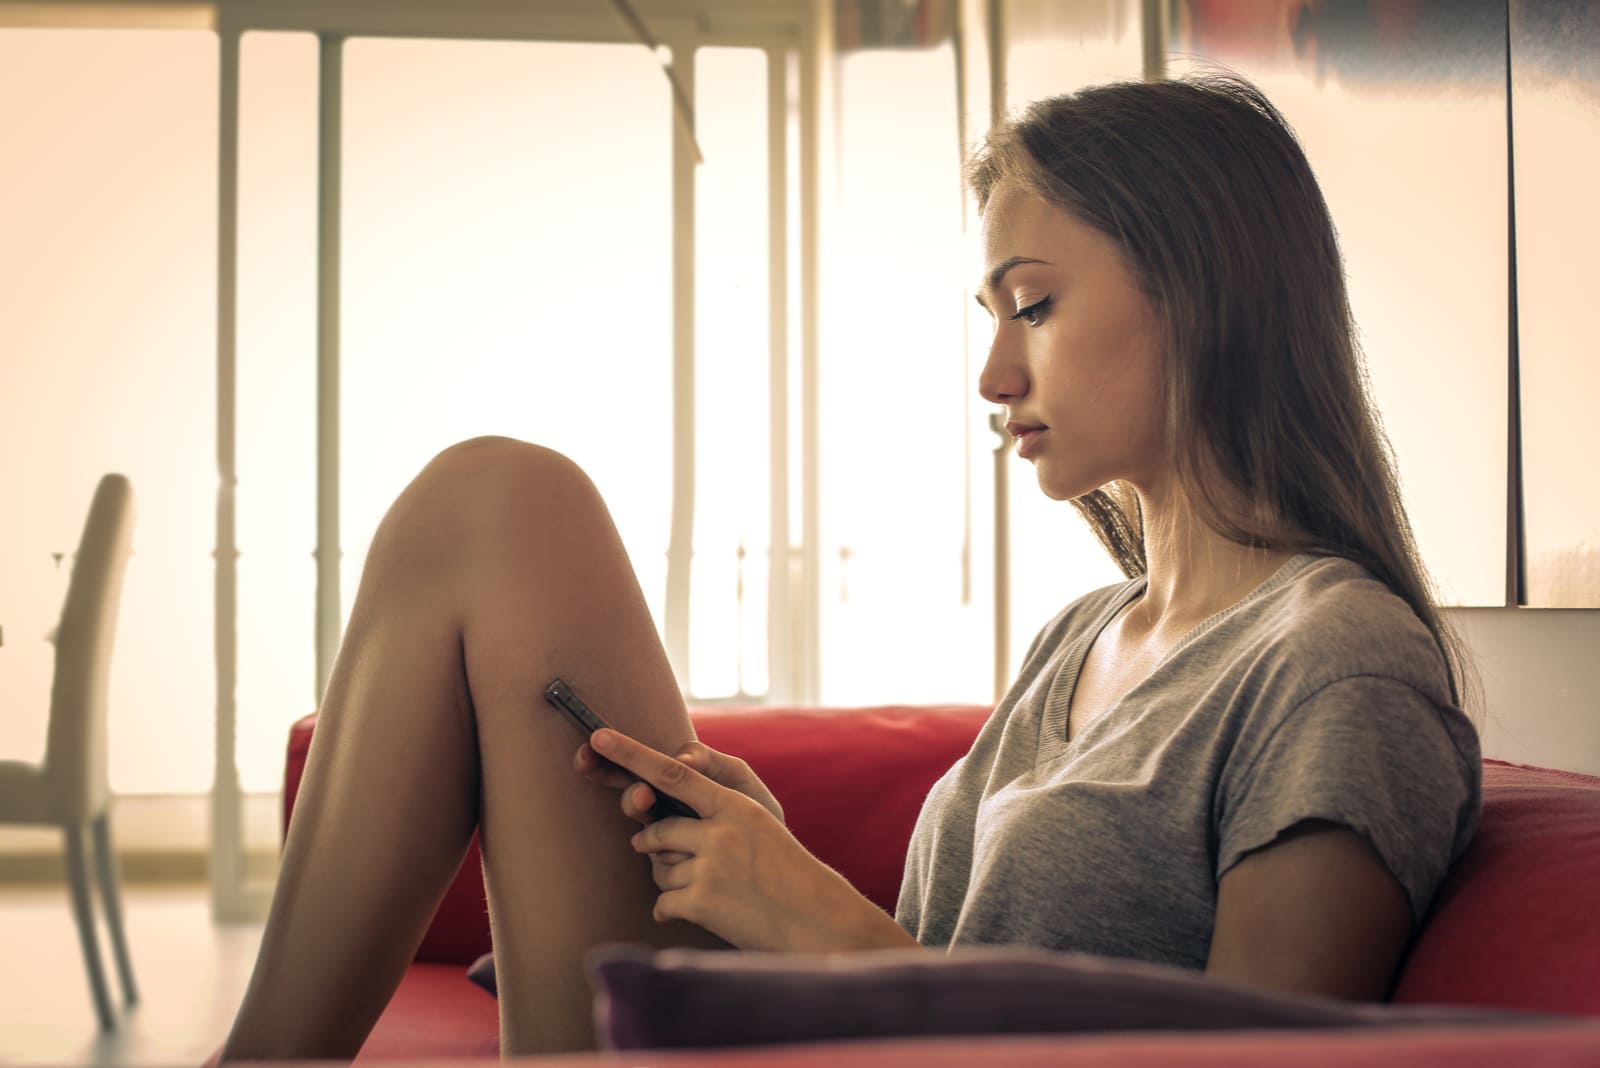 6 Texts You’ll Regret Sending Him After The Break-Up